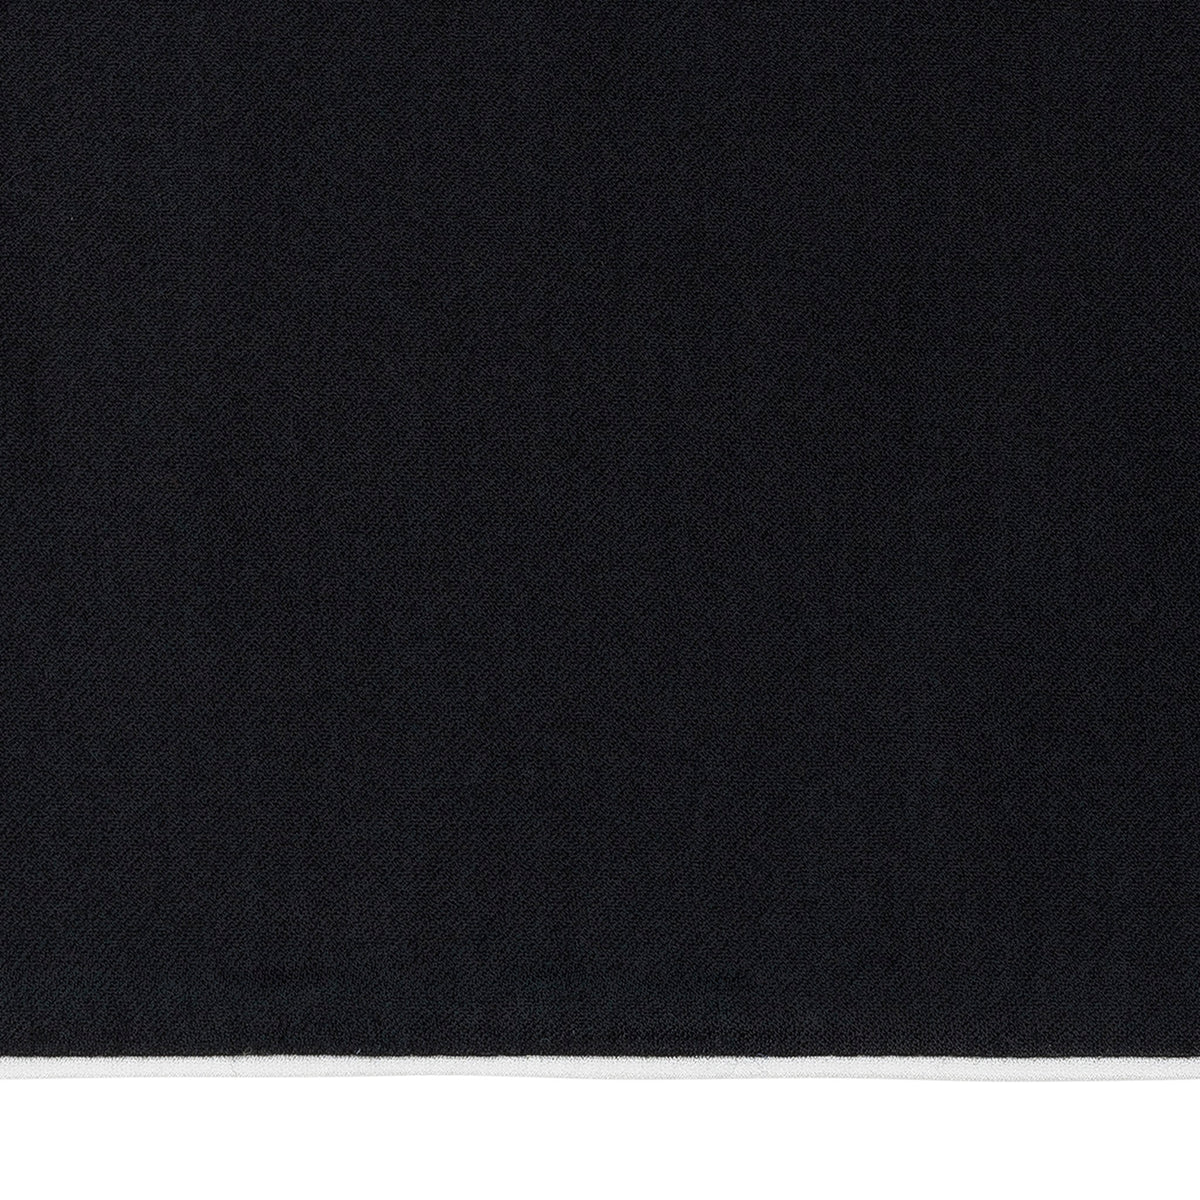 Swatch Sample of Matouk Nocturne Pajama Set in Color Black and Bone